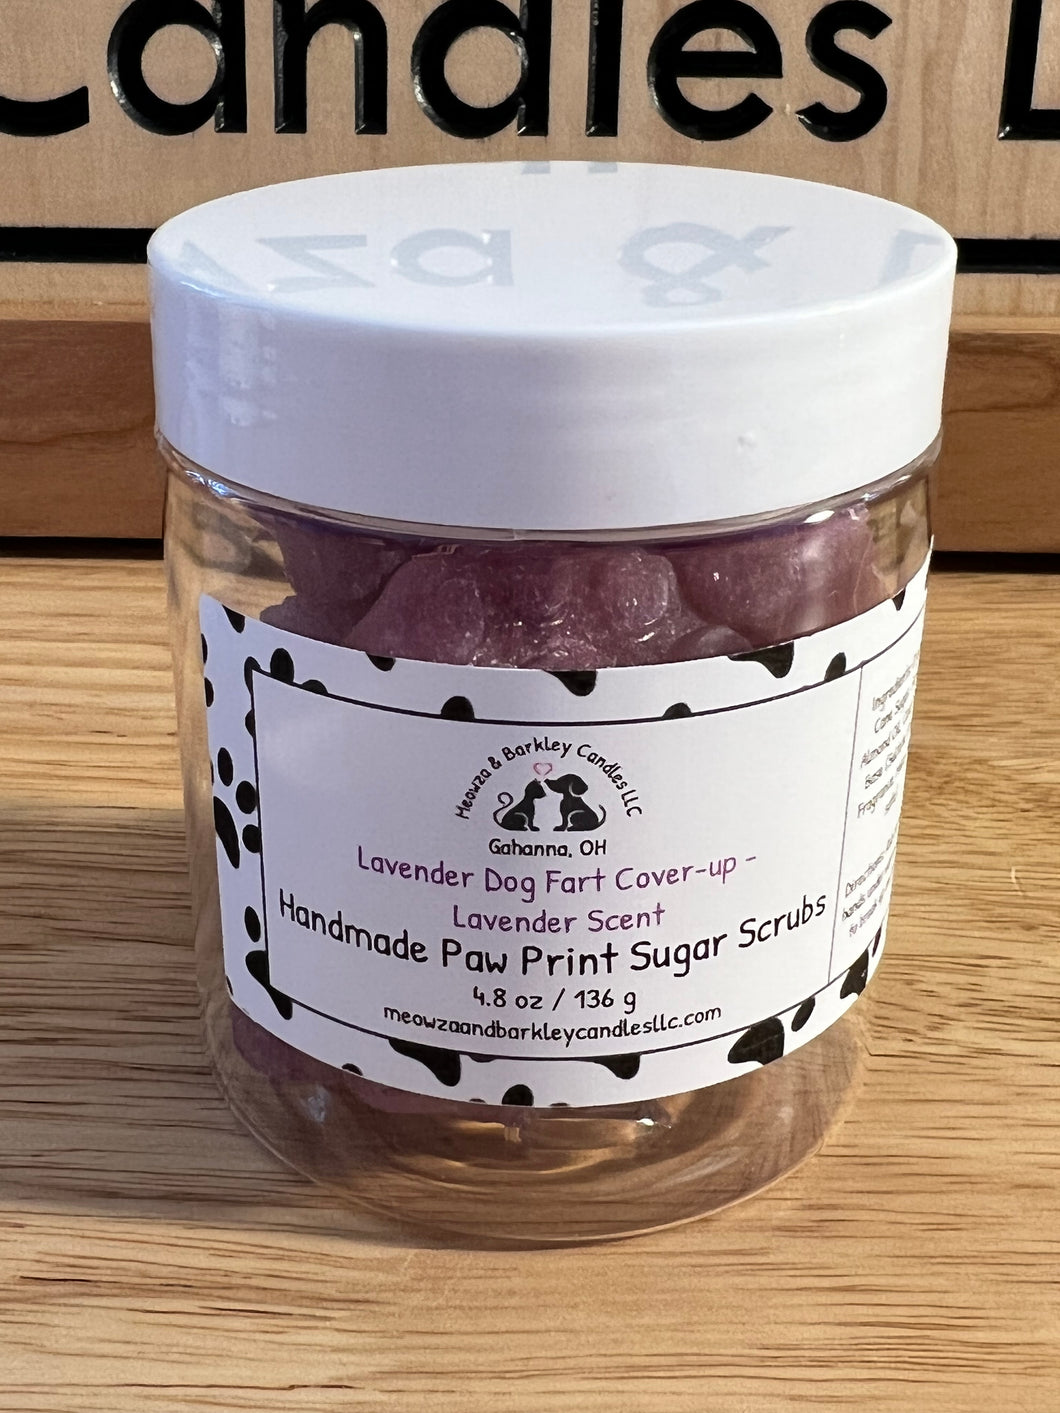 Lavender Dog Fart Cover-up Handmade Paw Print Sugar Scrubs - Lavender Scent